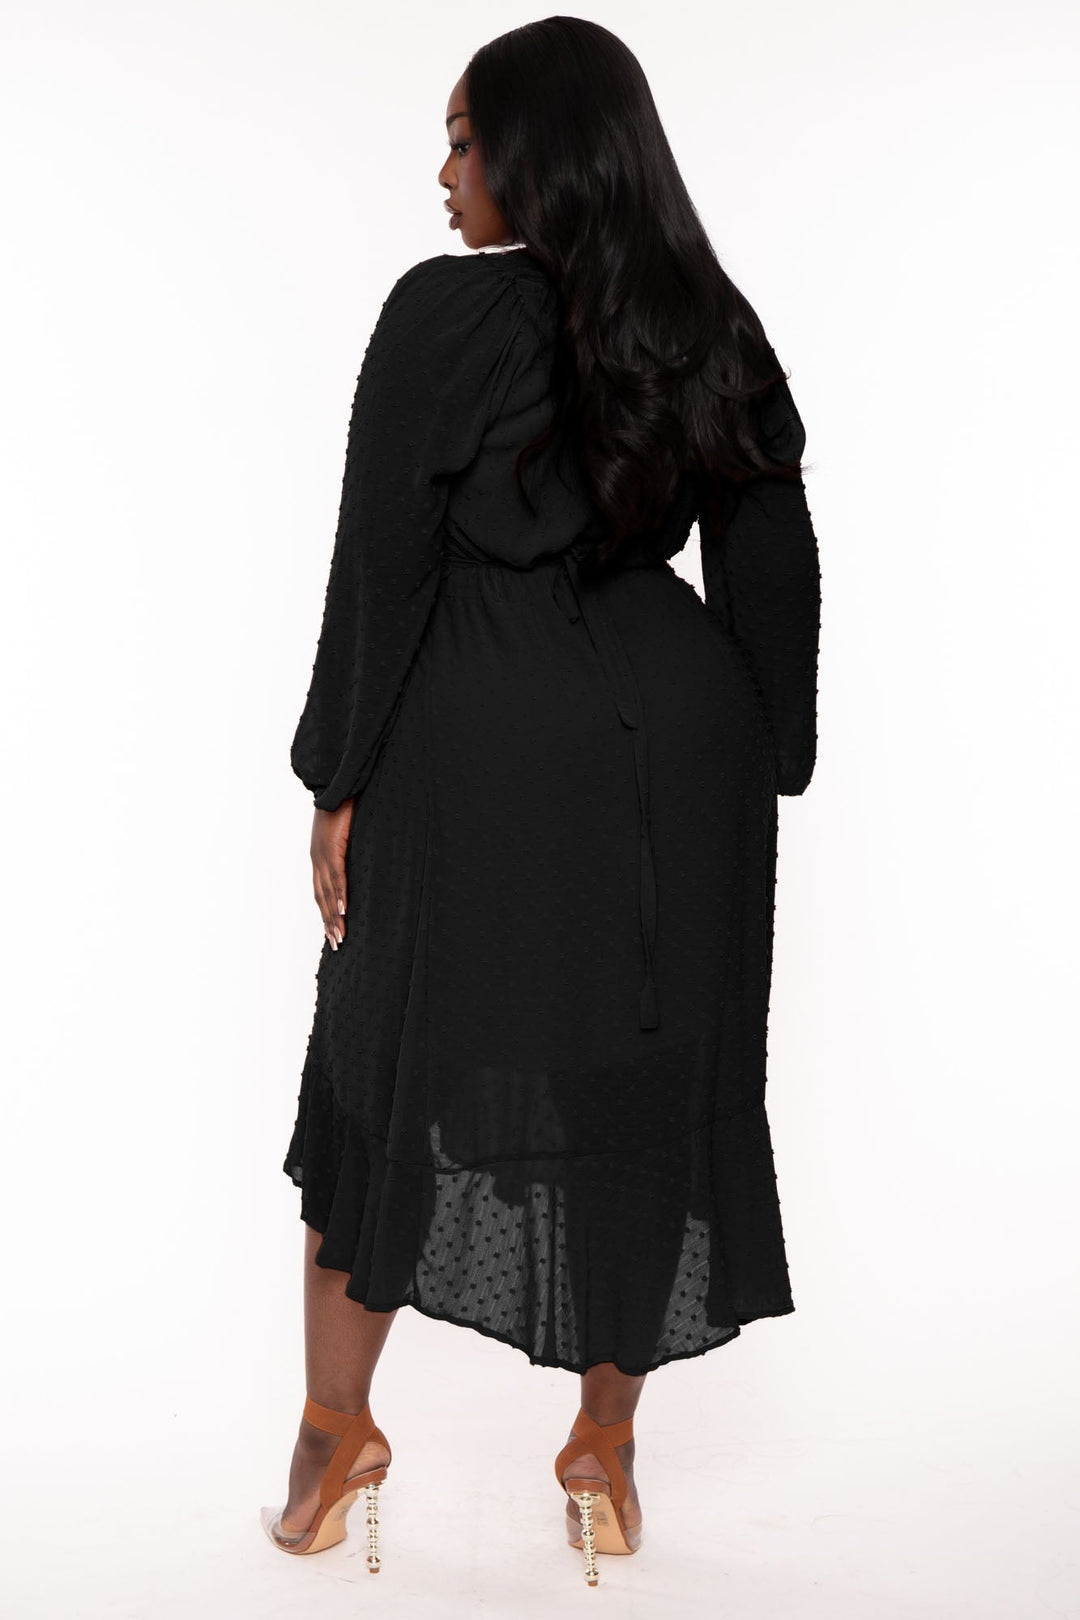 CULTURE CODE Dresses Plus Size Swiss Dot Wrap  Ruffle Dress - Black